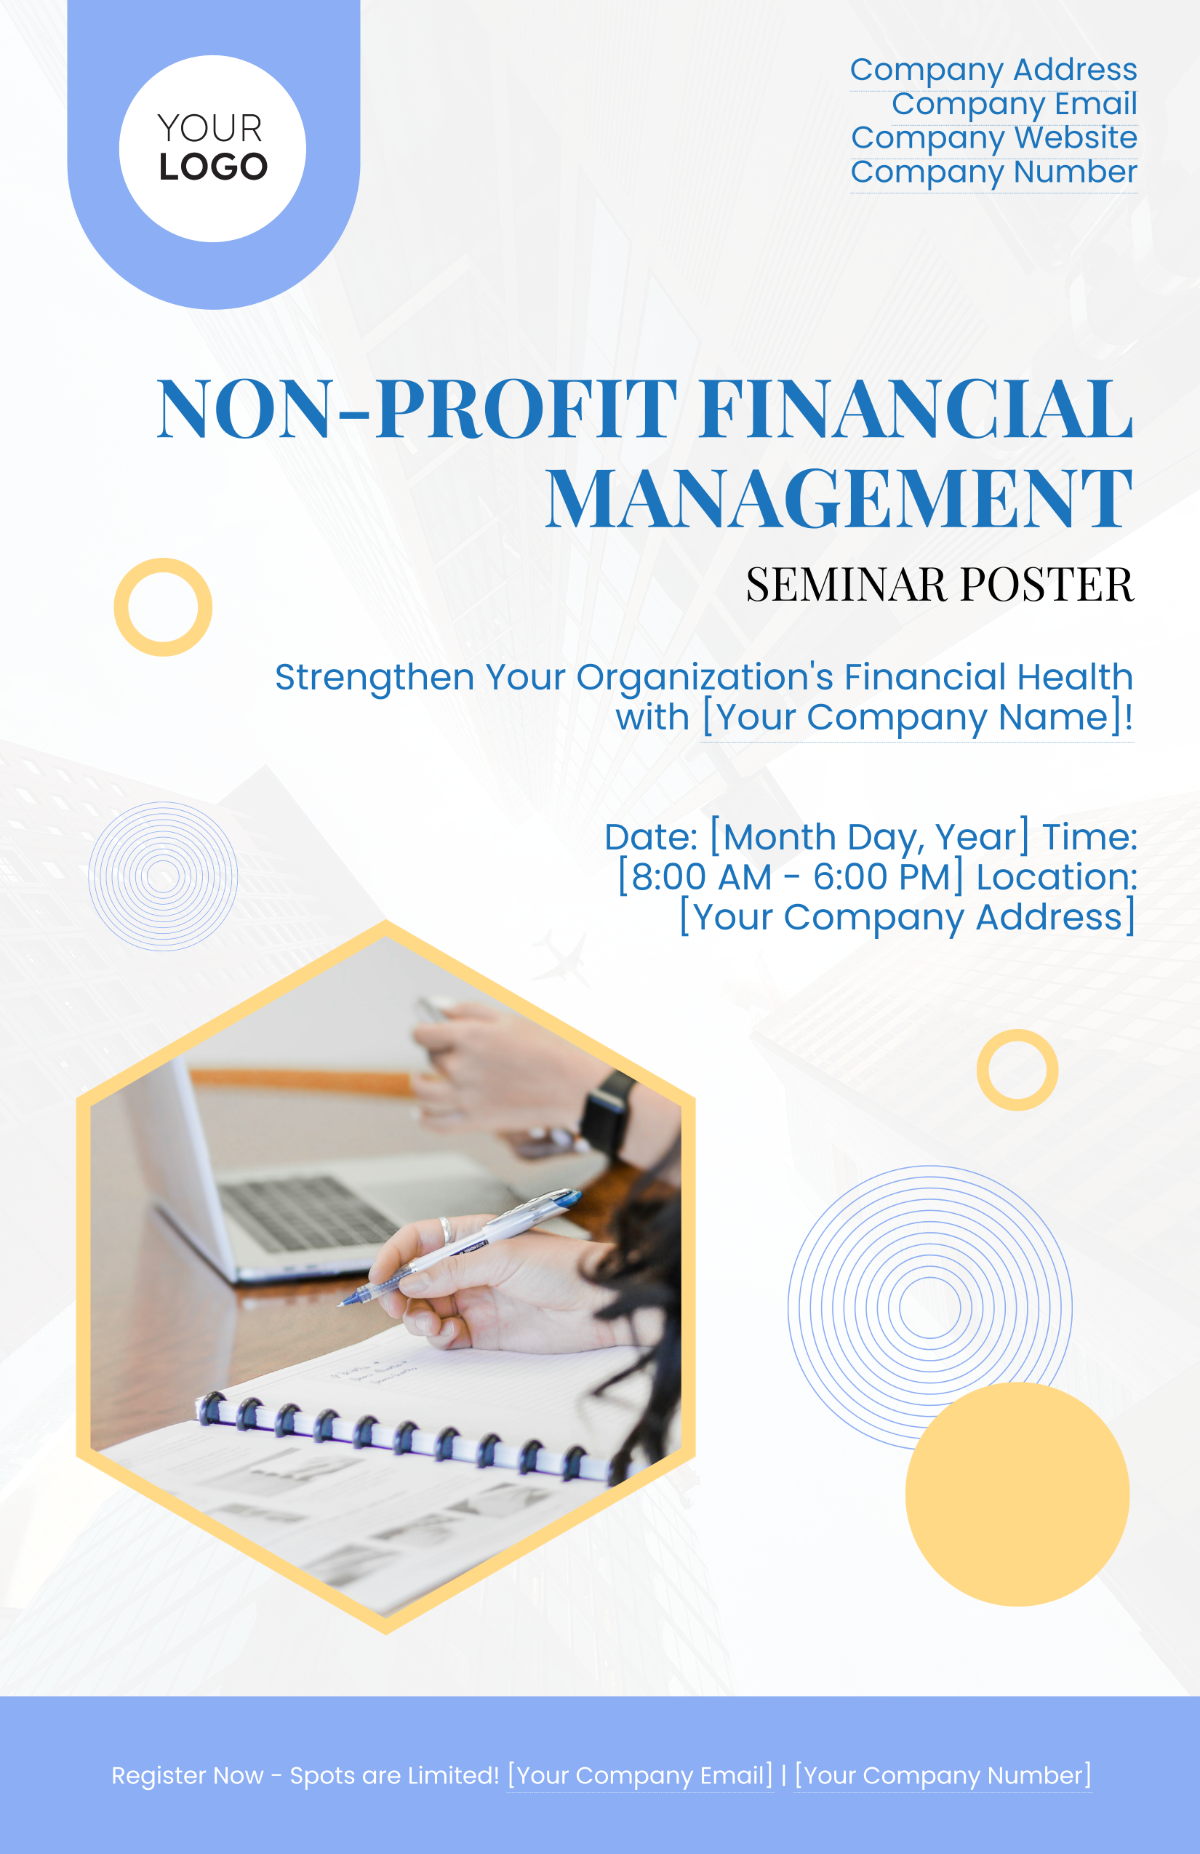 Non-Profit Financial Management Seminar Poster